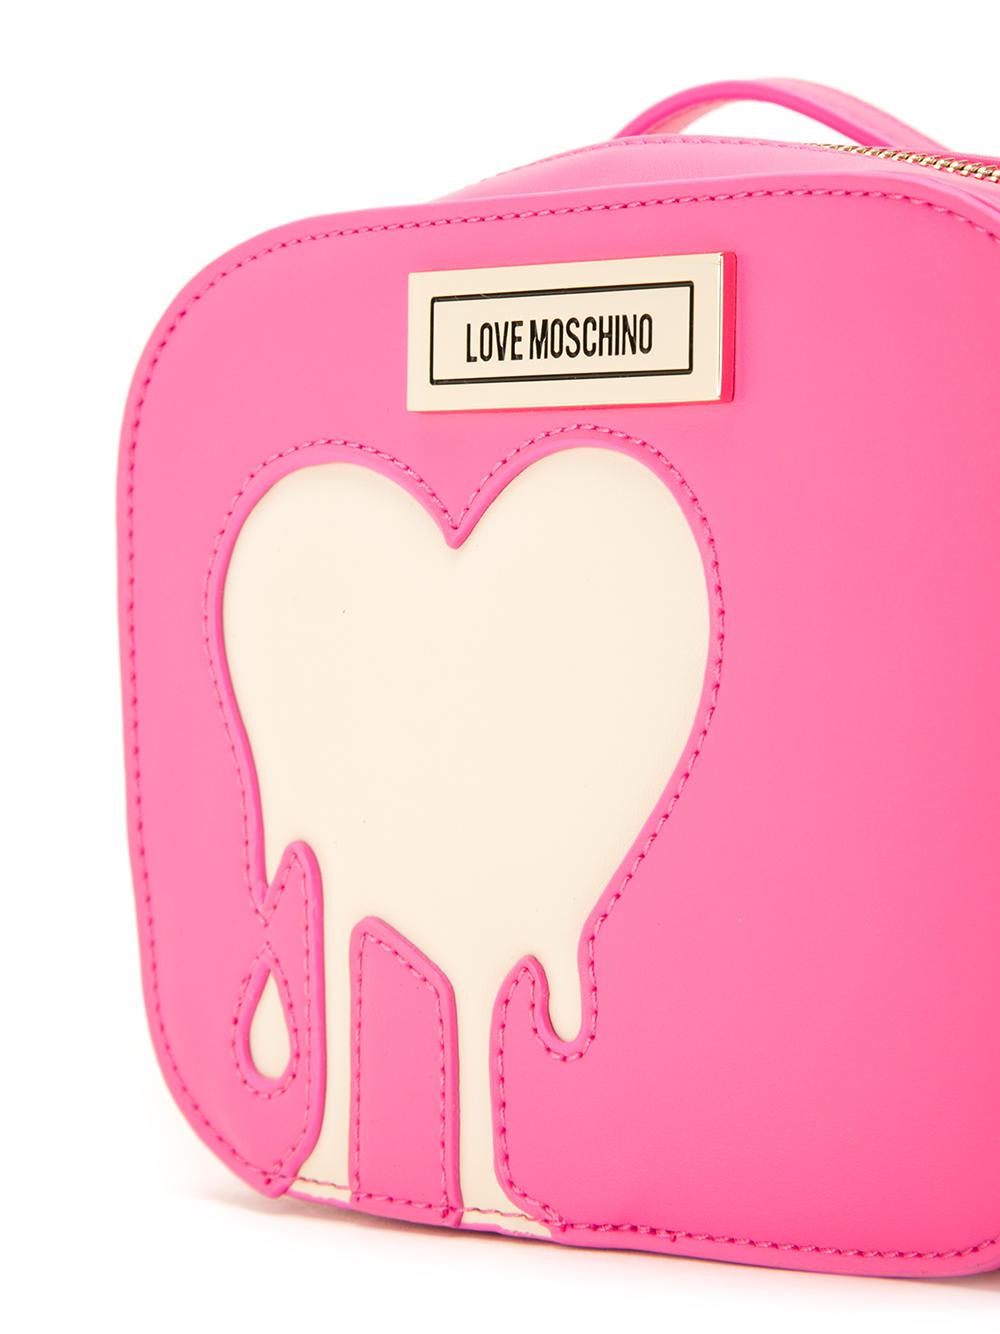 love moschino melting heart bag